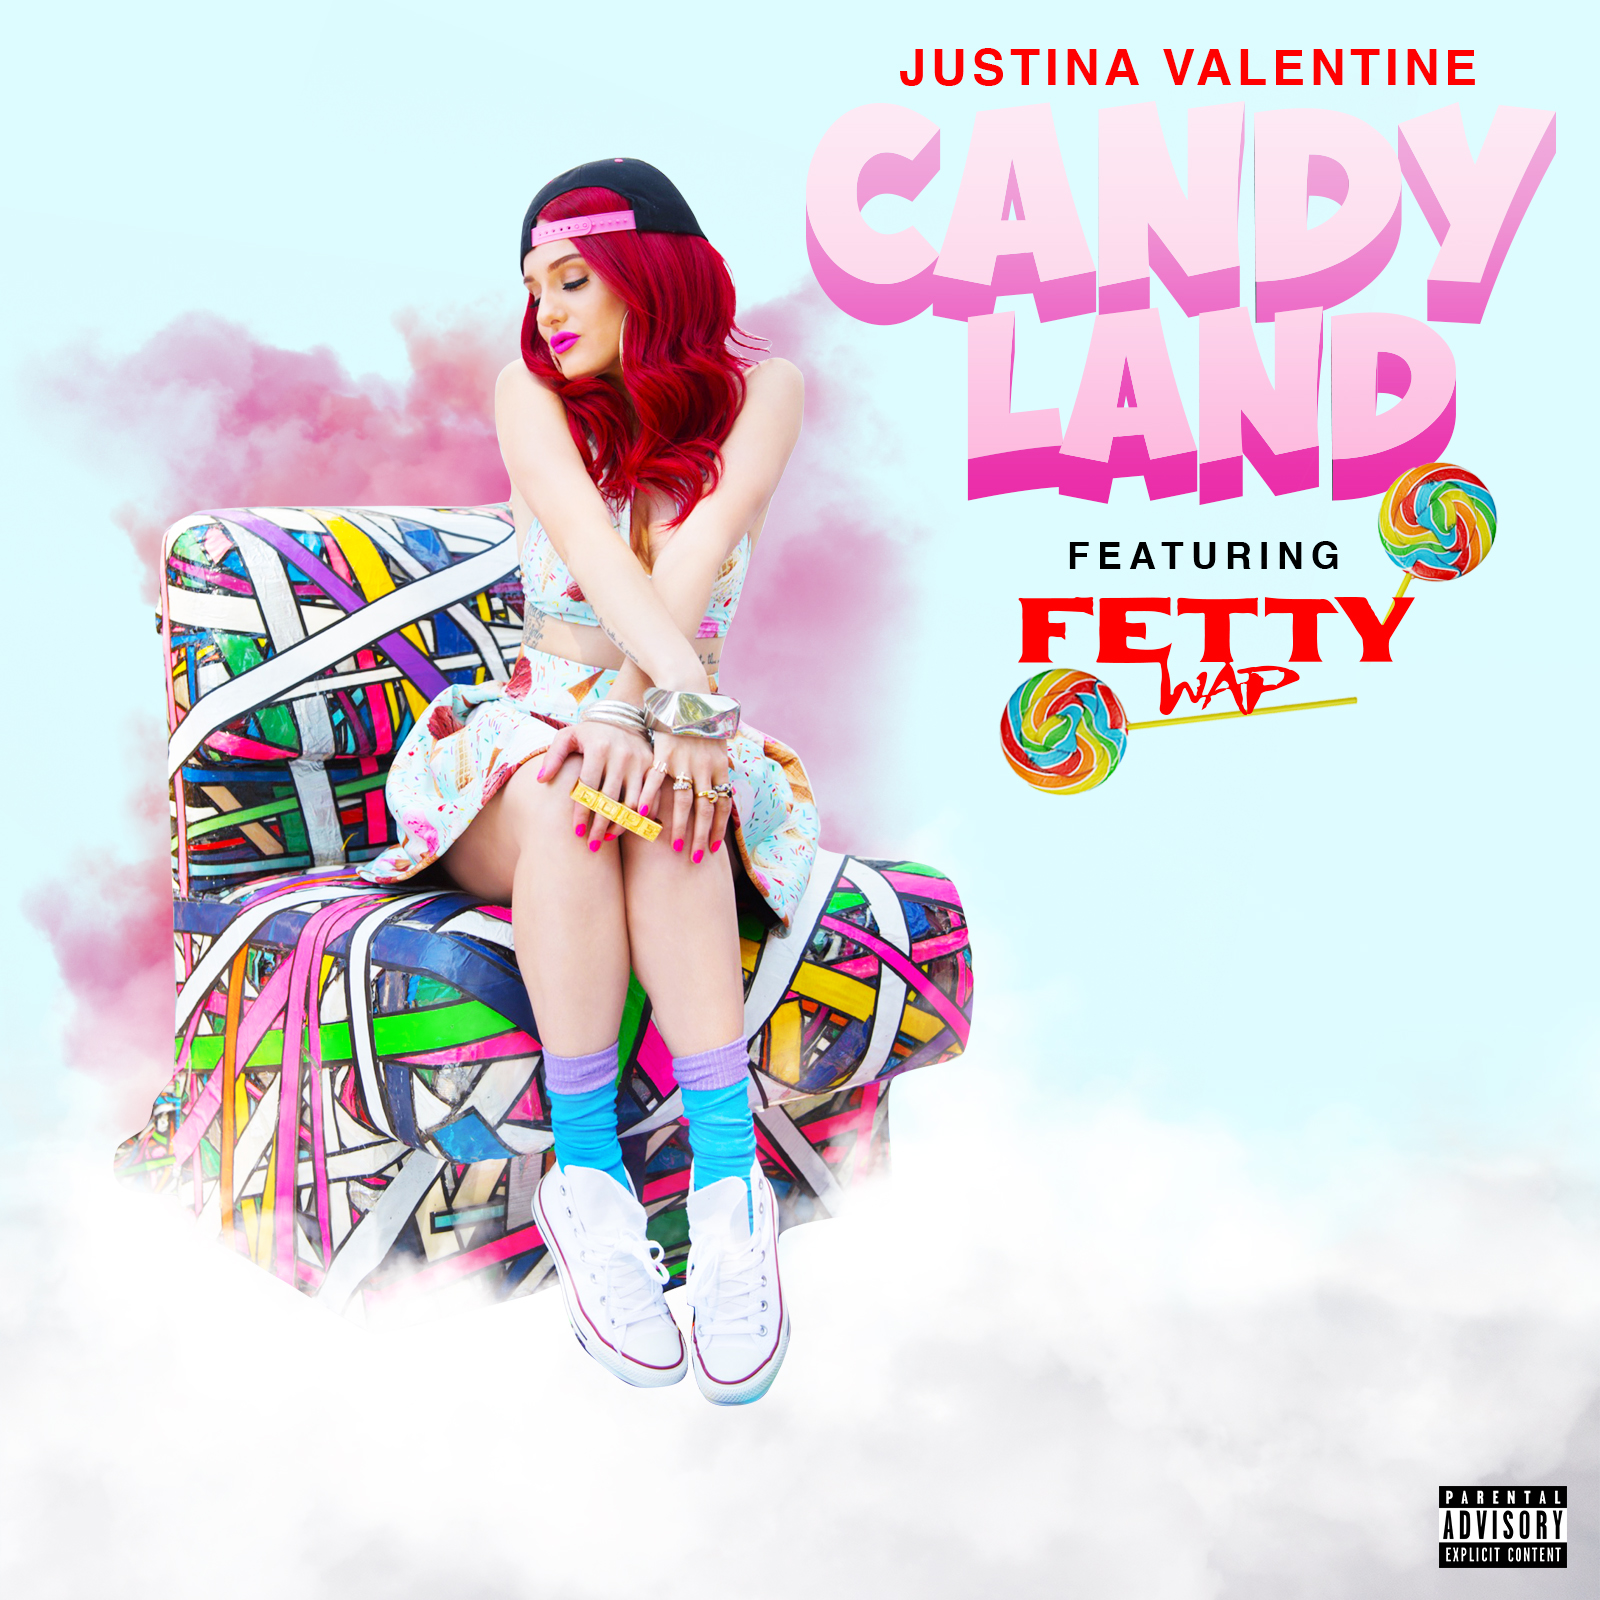 Justina-Valentine-Fetty-Wap-Candy-Land-single-cover-art